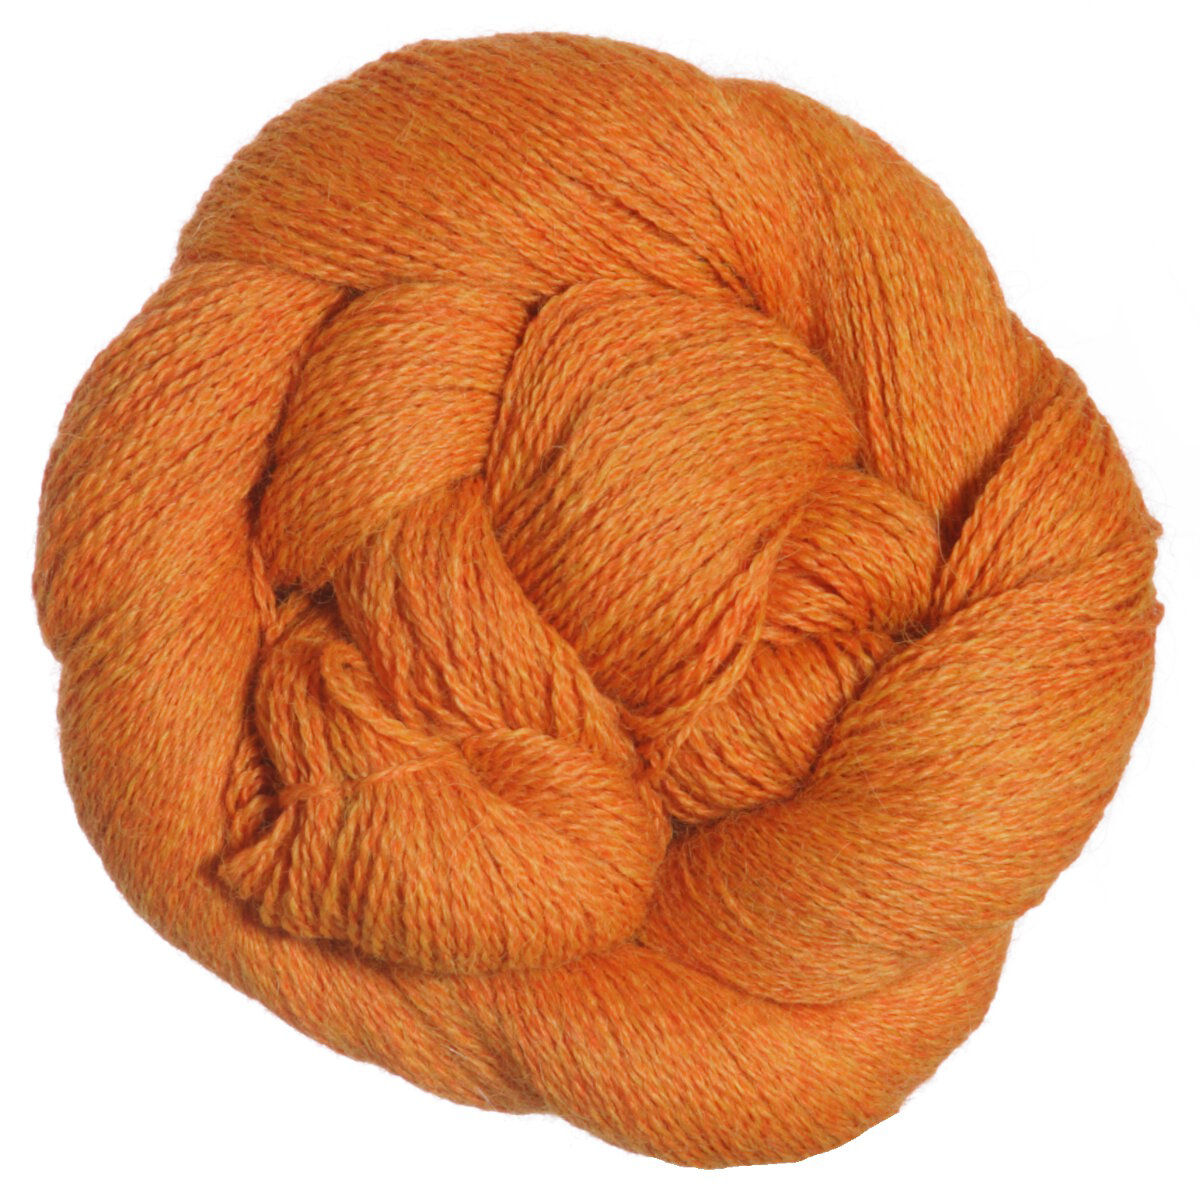 Umbra — Orange Flower Yarn